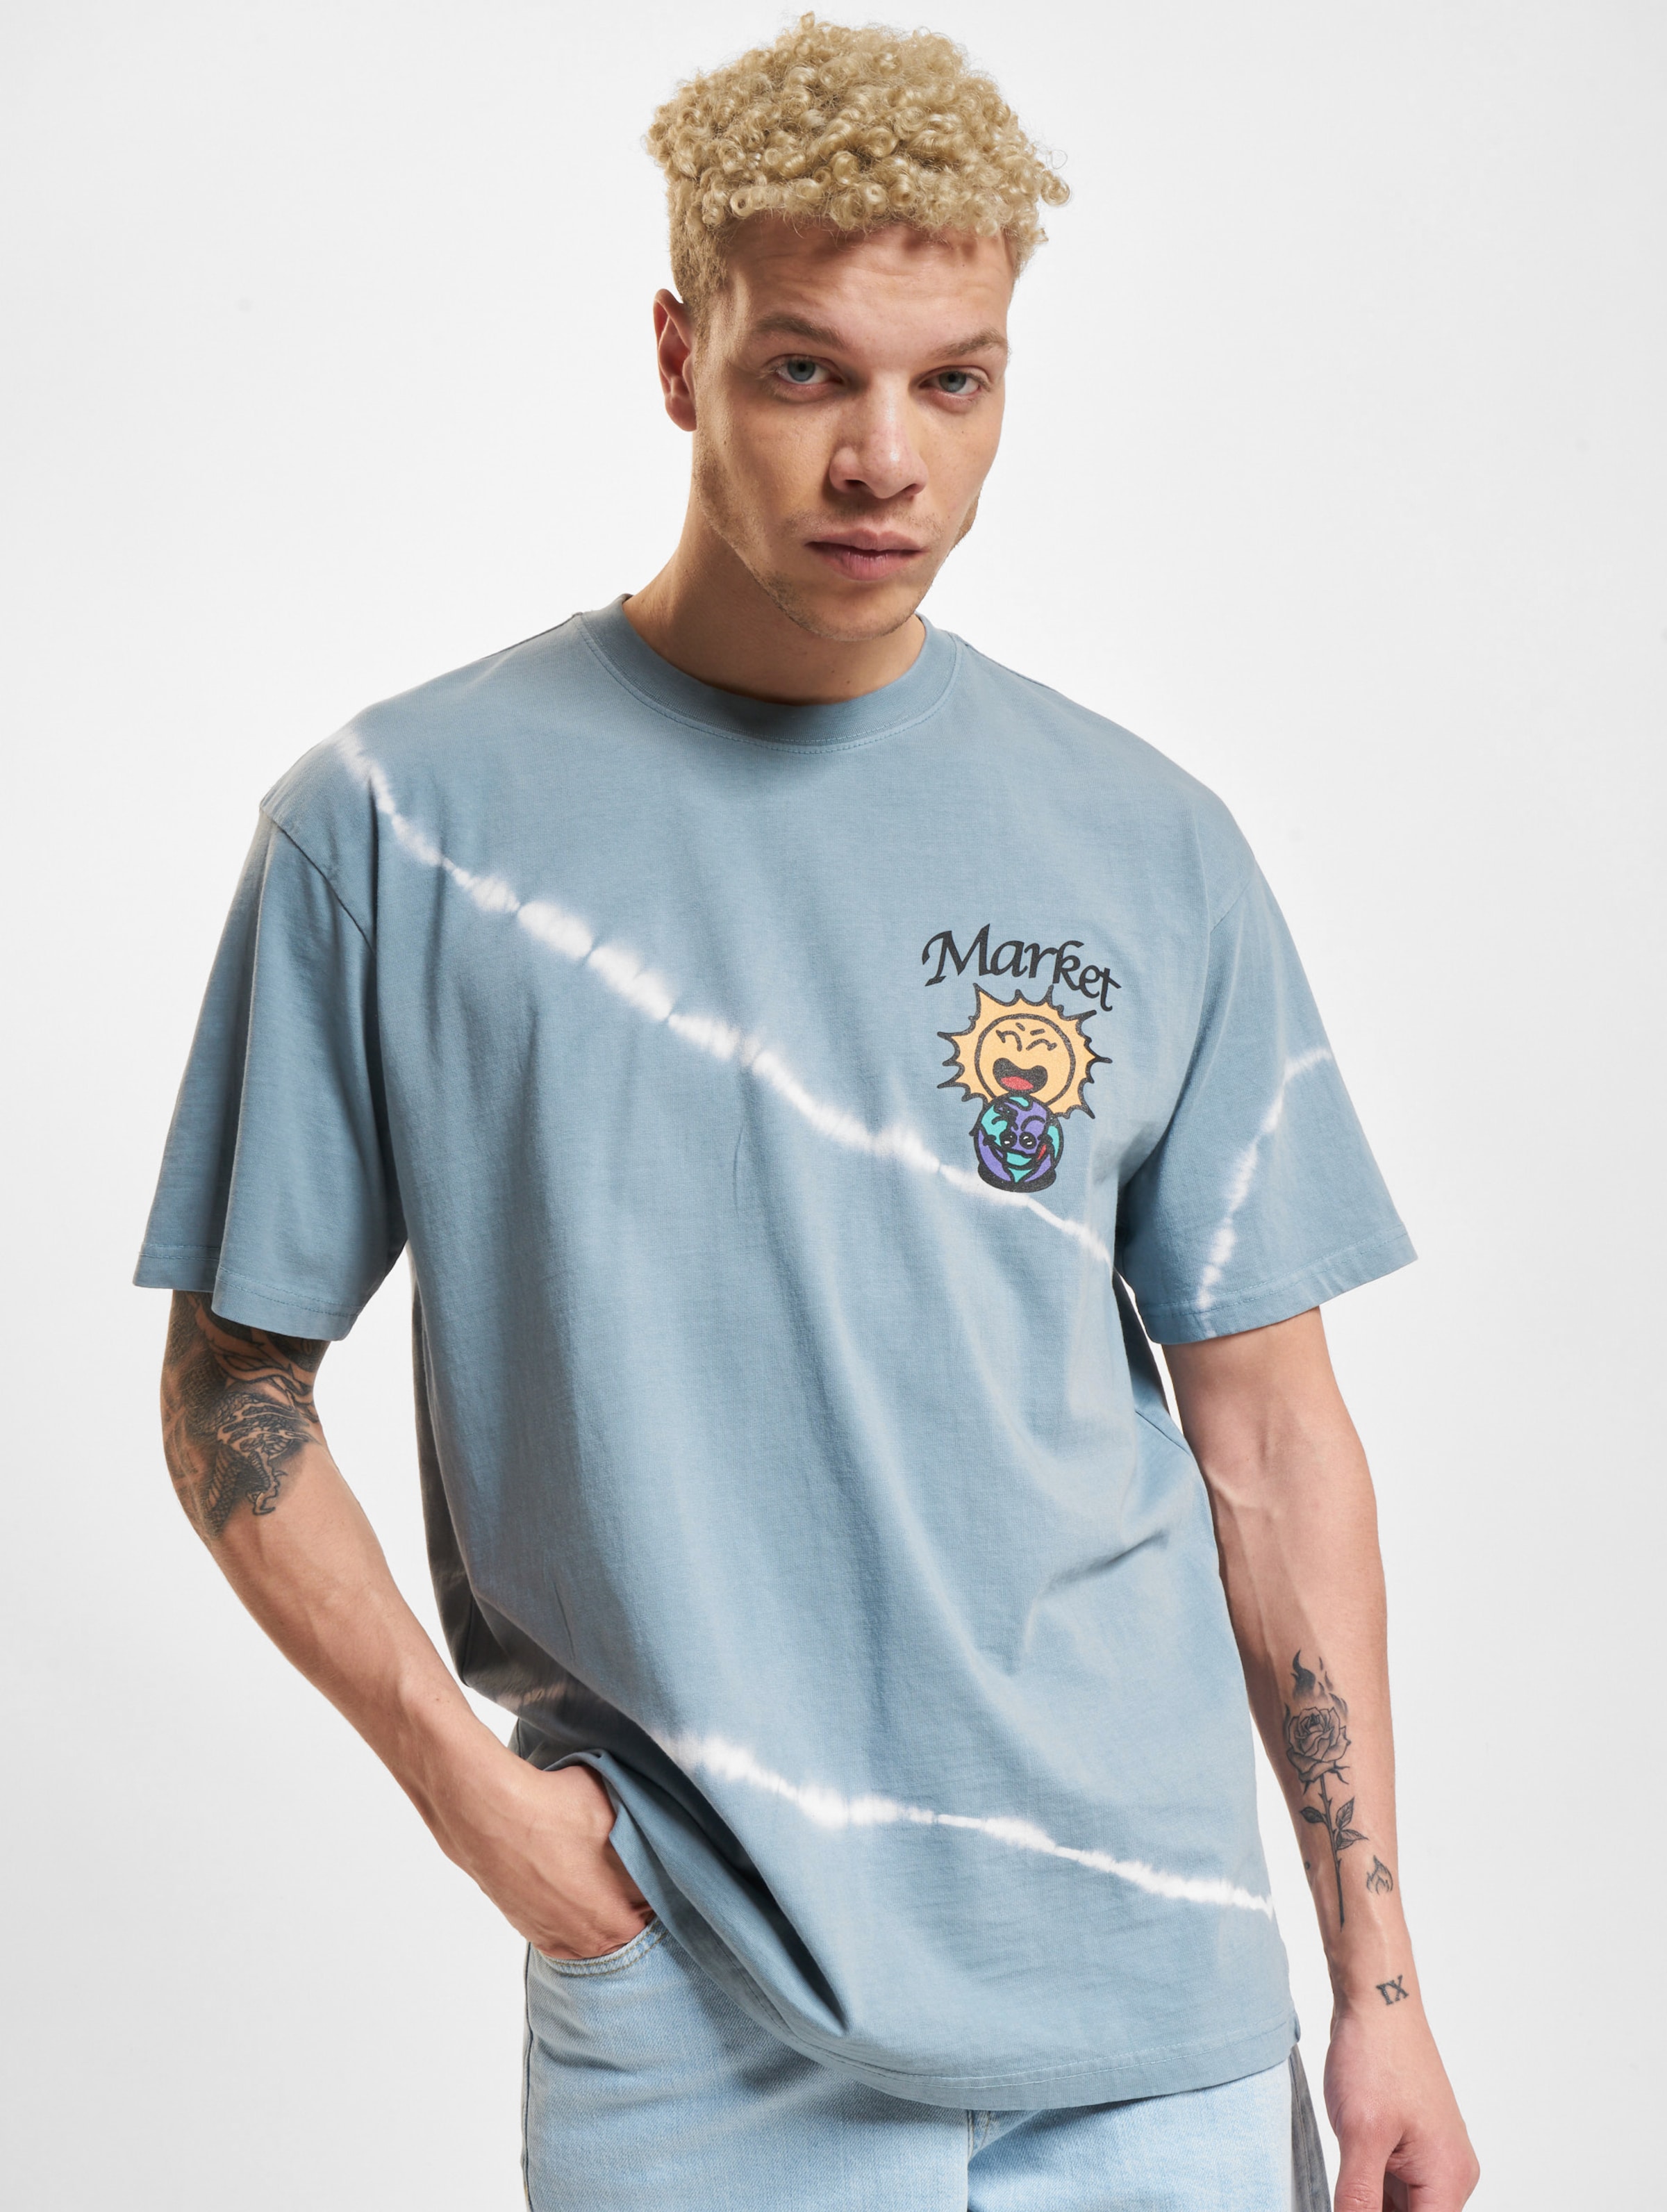 Market Leave No Trace T-Shirts Männer,Unisex op kleur blauw, Maat XL